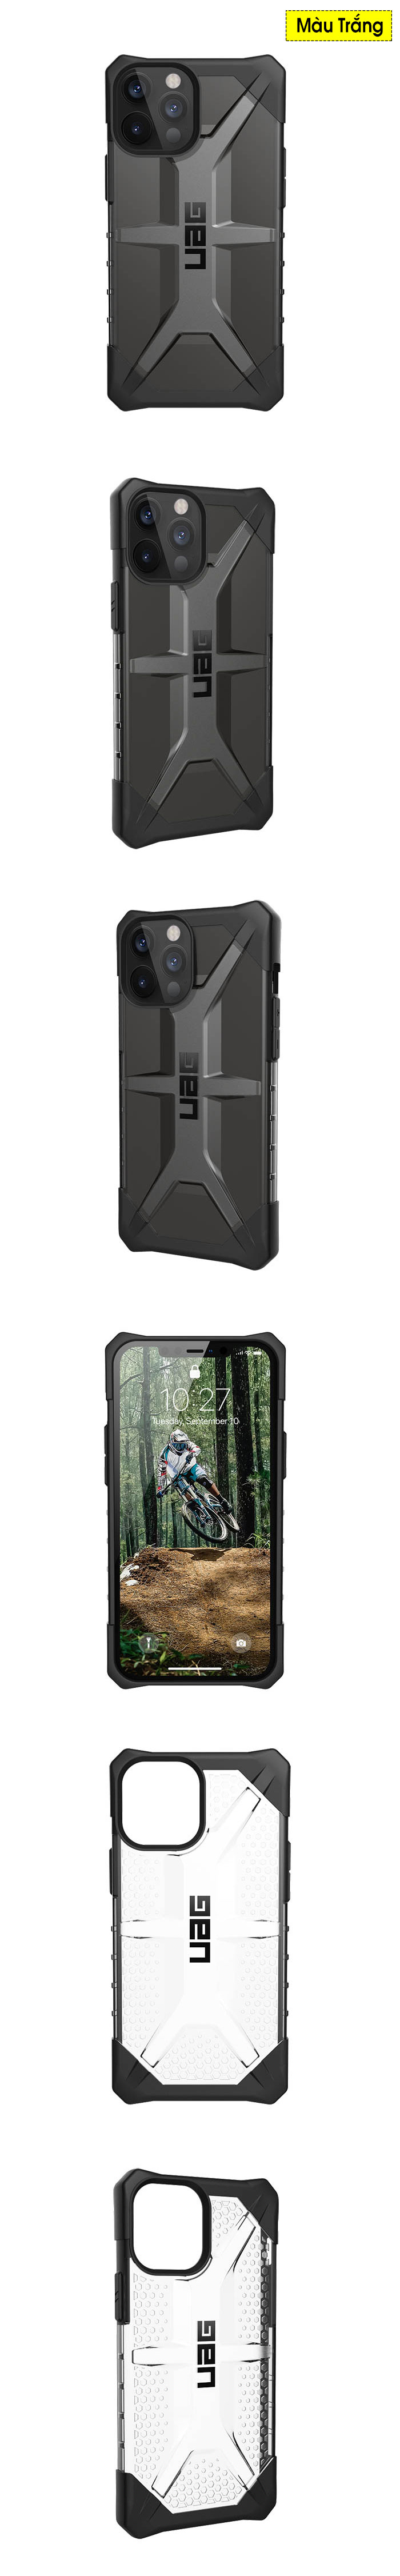 Ốp lưng iPhone 12 Pro Max UAG Plasma Series 1